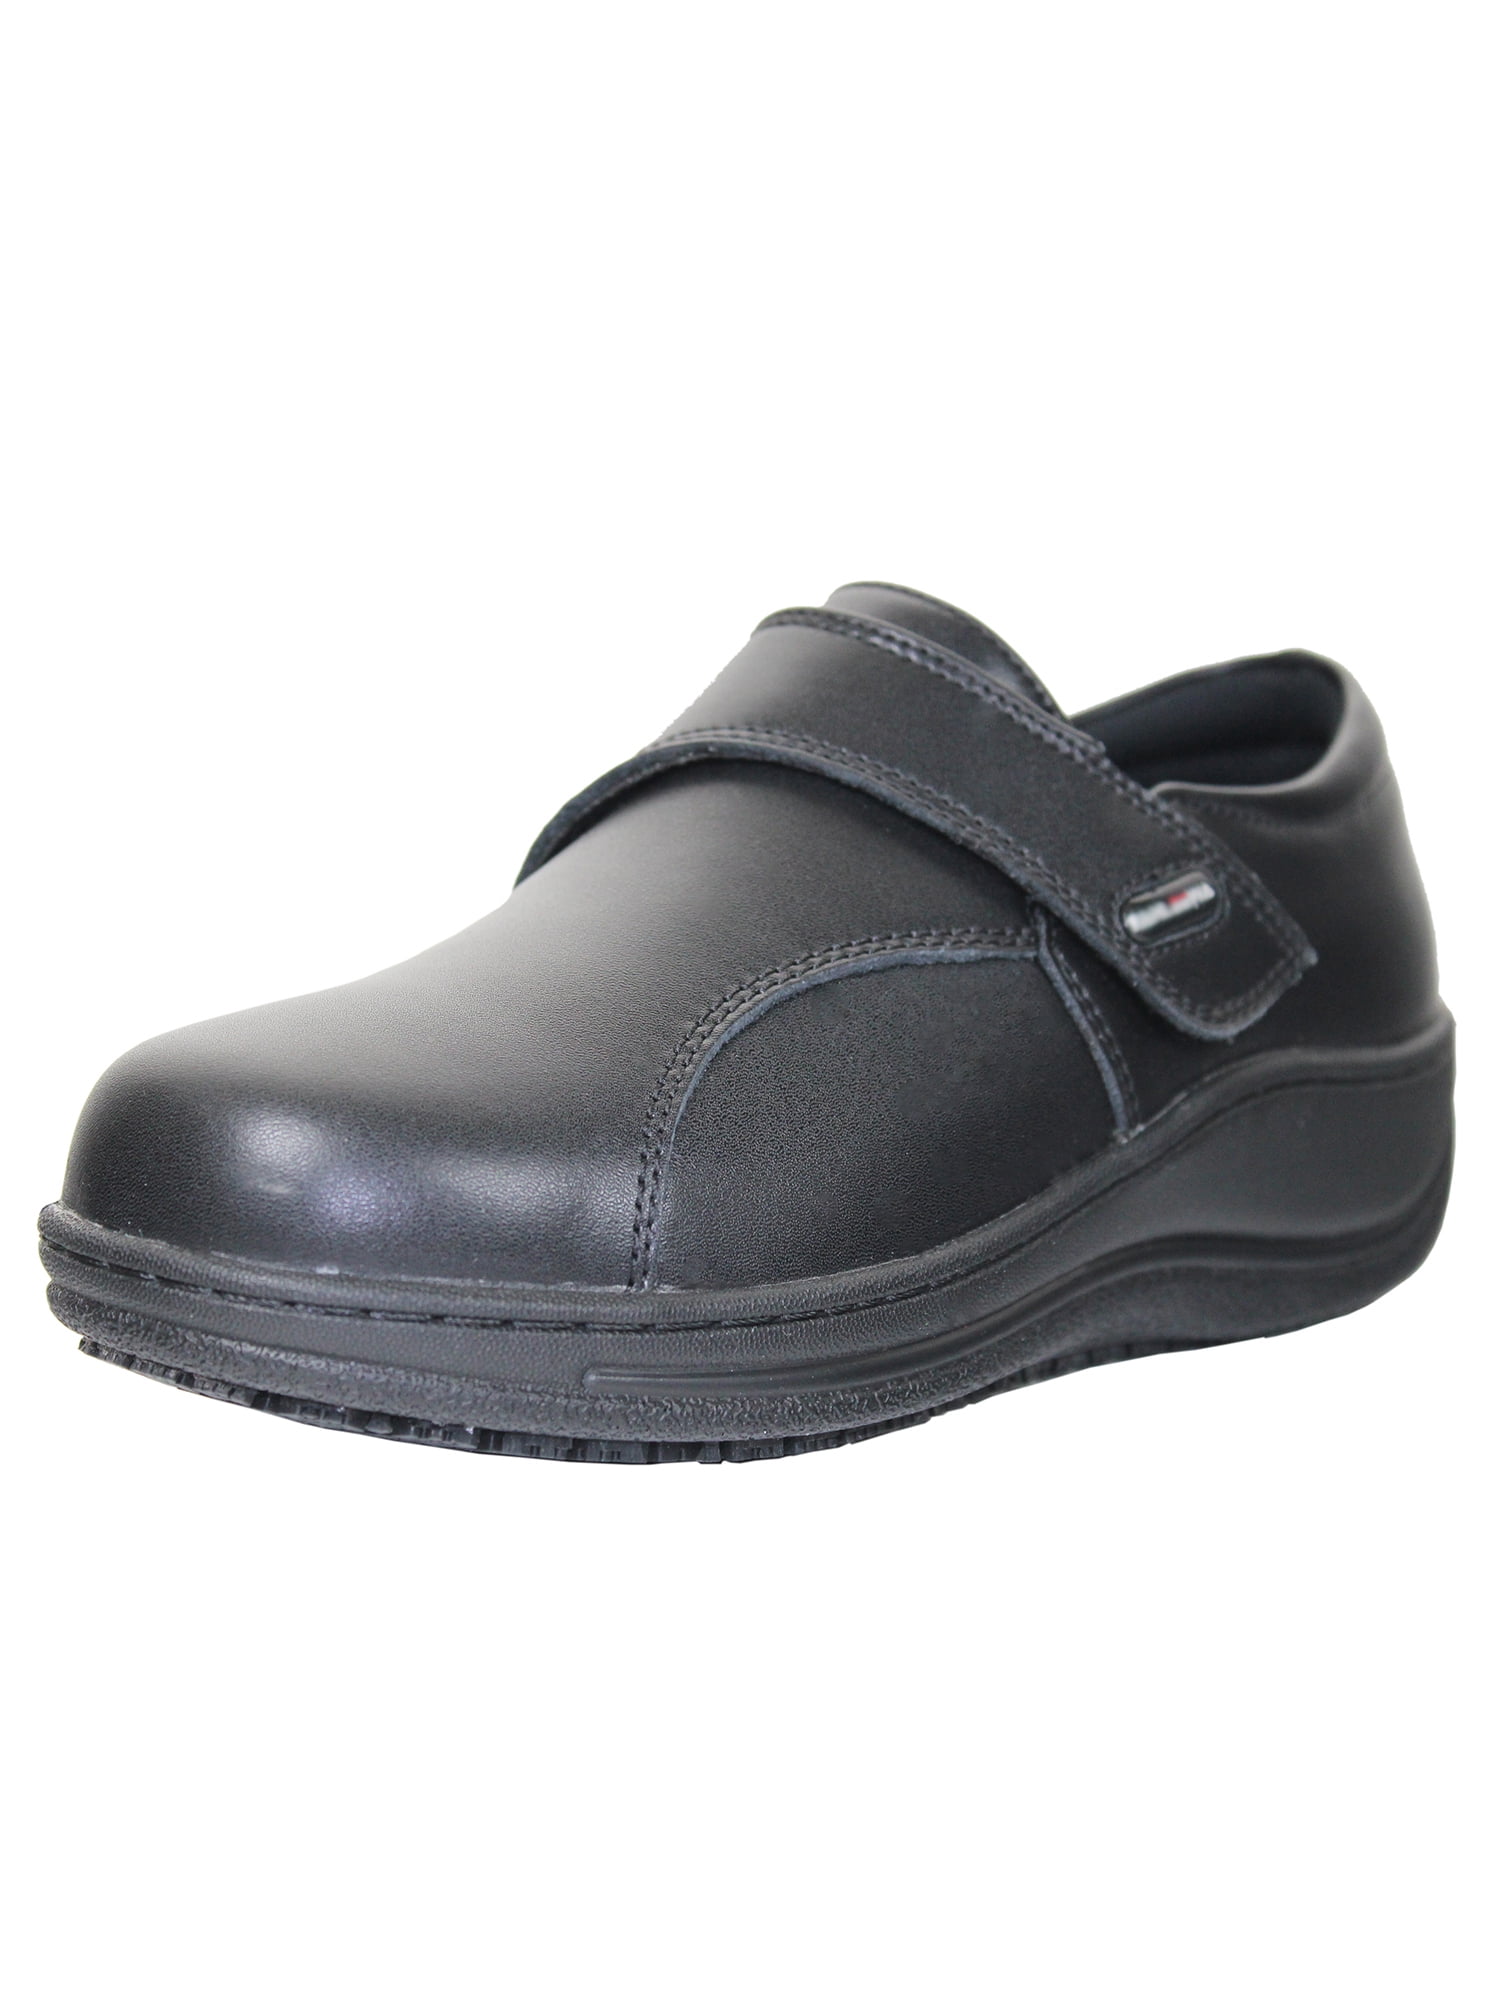 walmart slip resistant womens work shoes